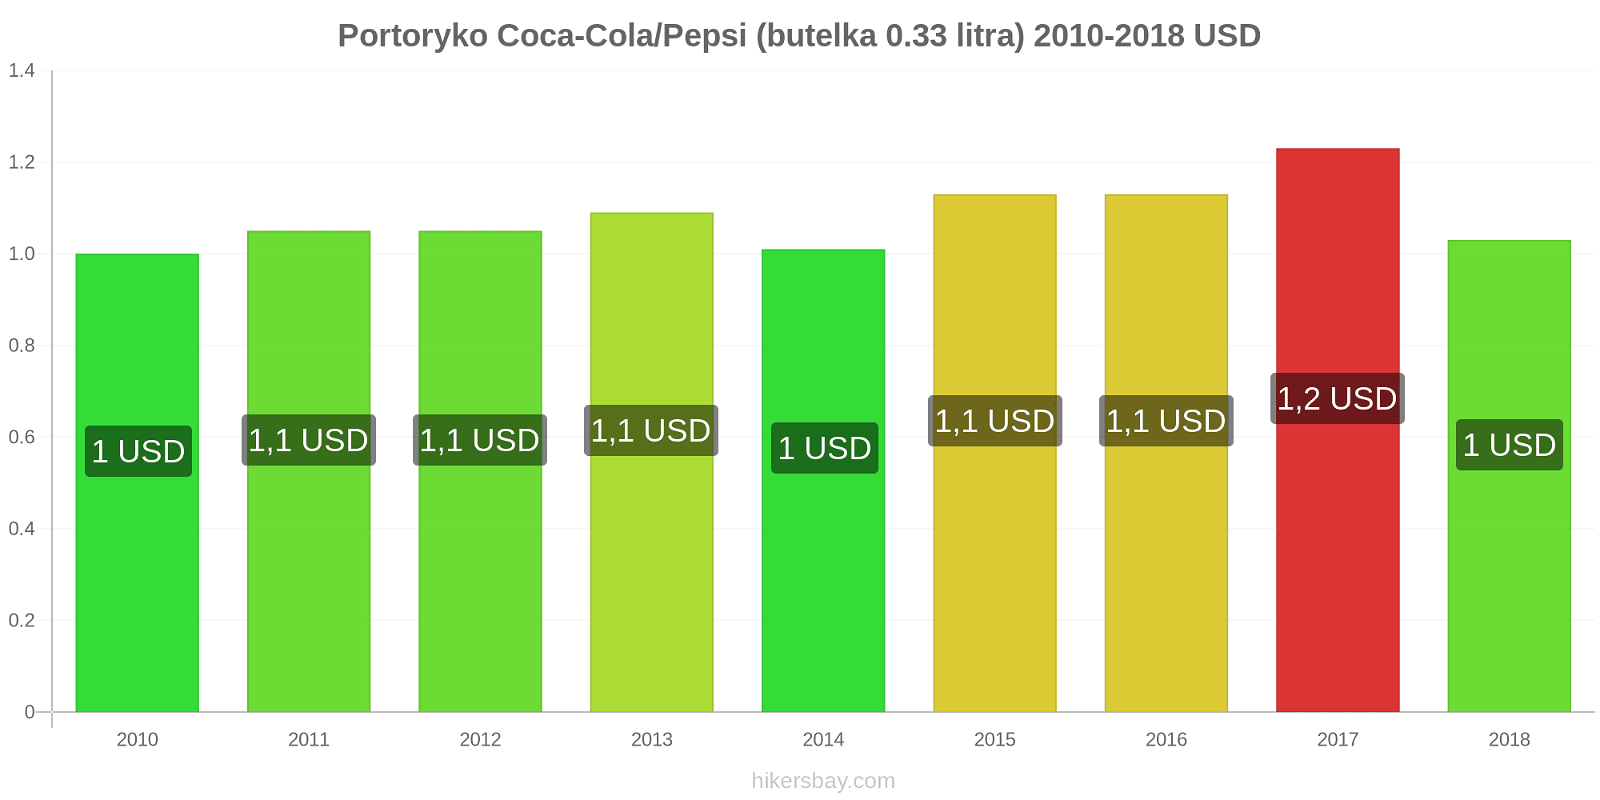 Portoryko zmiany cen Coca-Cola/Pepsi (butelka 0.33 litra) hikersbay.com